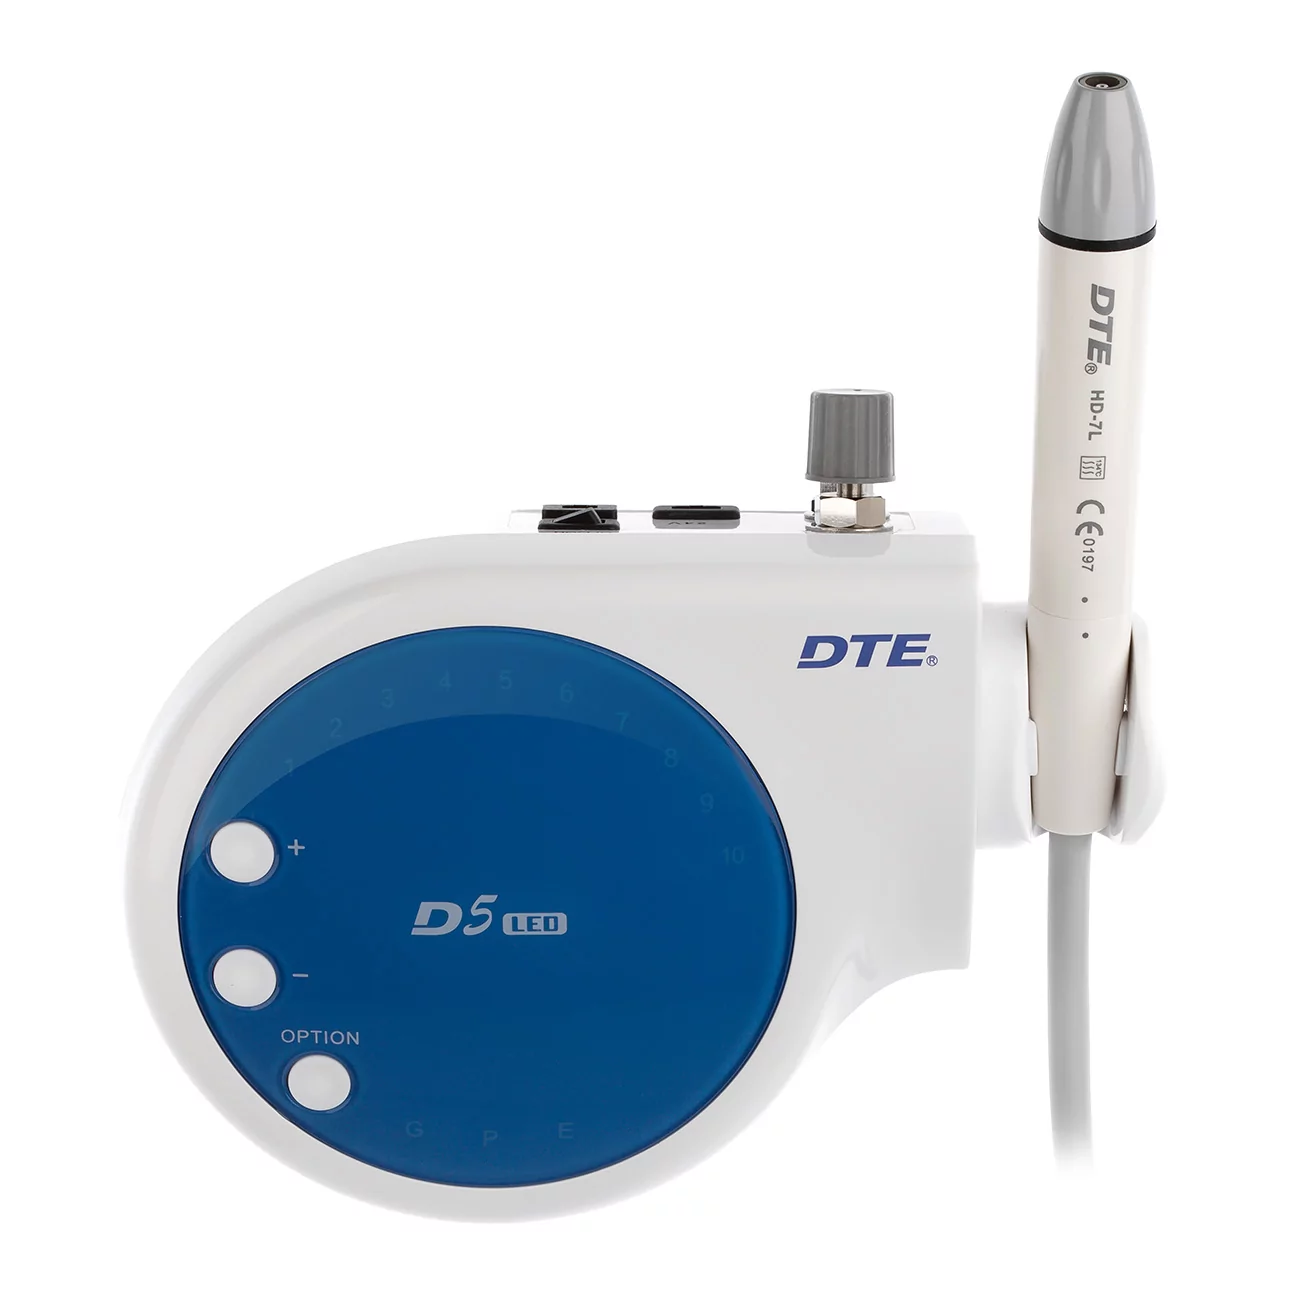 Ультразвуковой скейлер DTE-D5 LED, 6 насадок в комплекте (ED1T, GD1Tx2, GD2T, GD4T, PD1T)